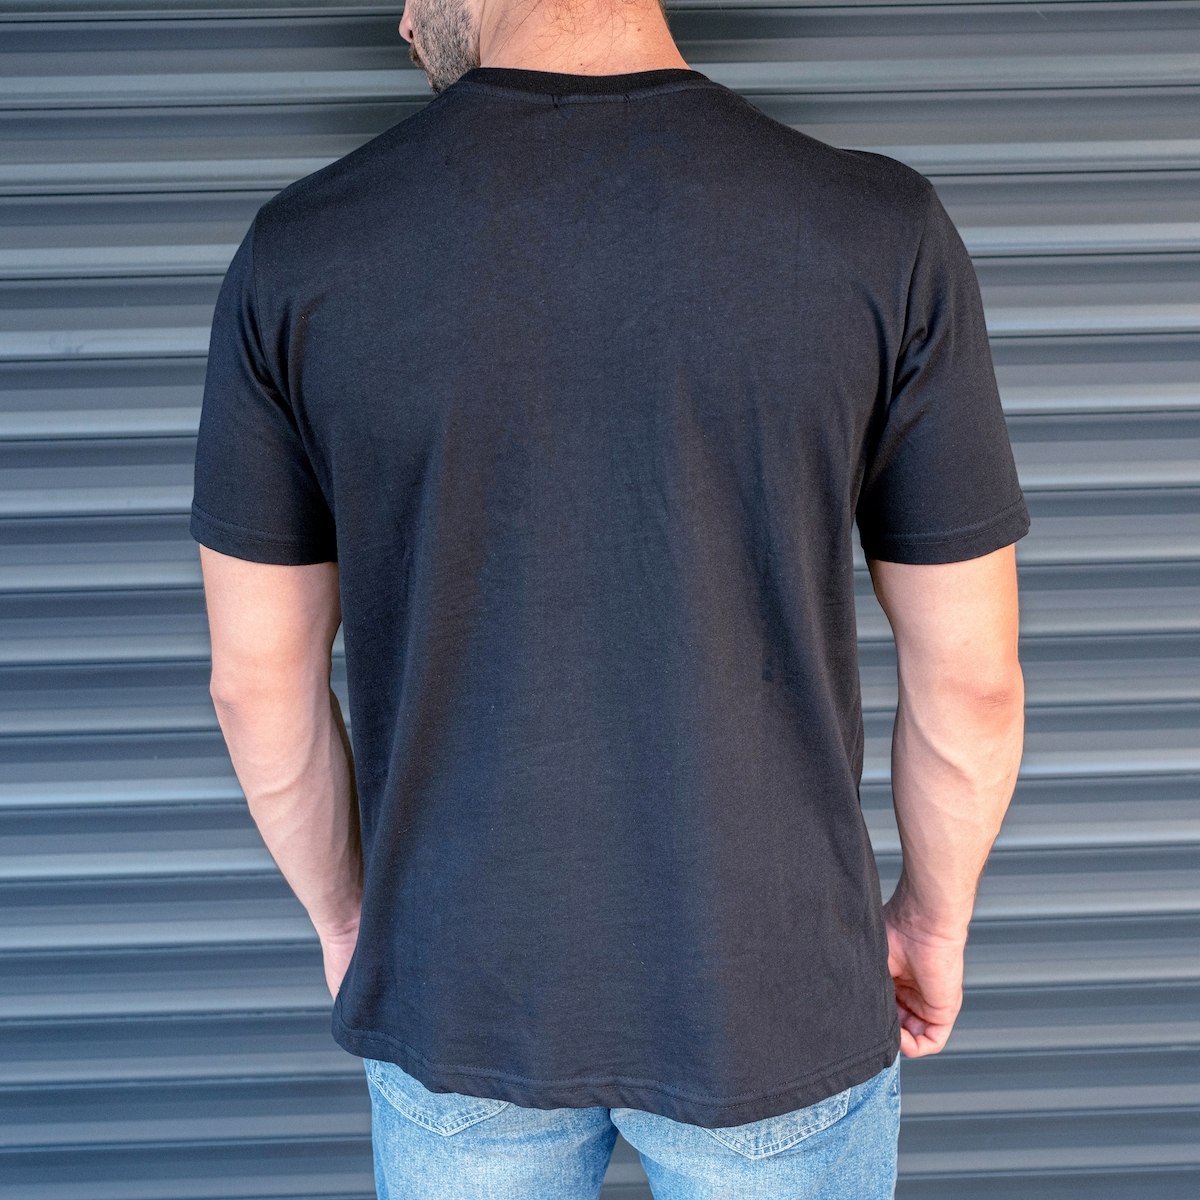 Men's "Doberman" T-Shirt In Black